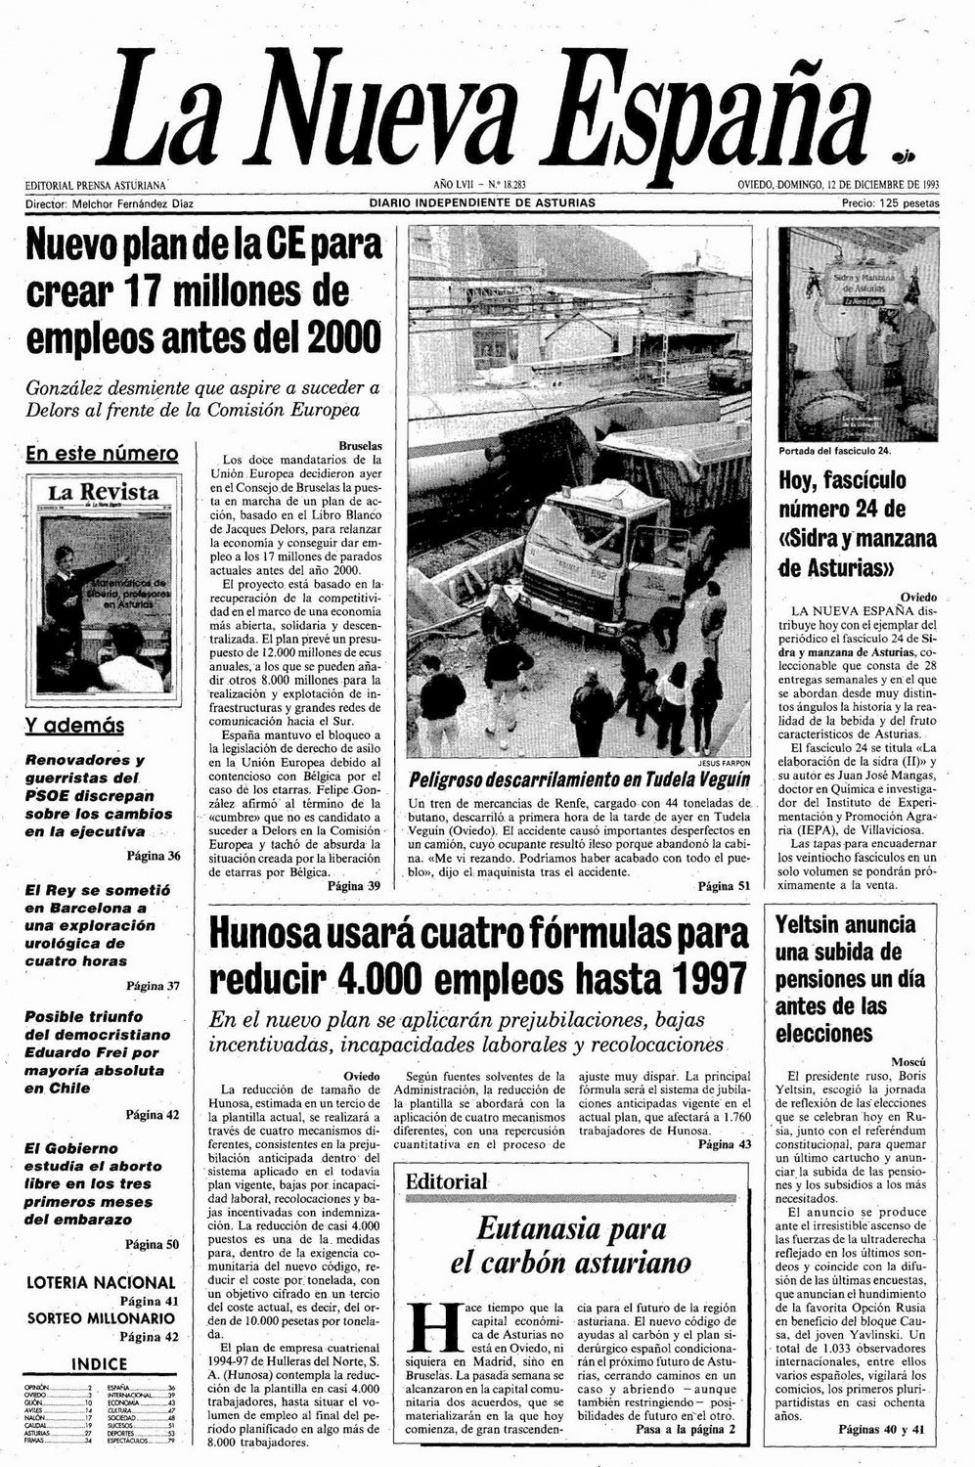 Portada del Domingo, 12 de Diciembre de 1993